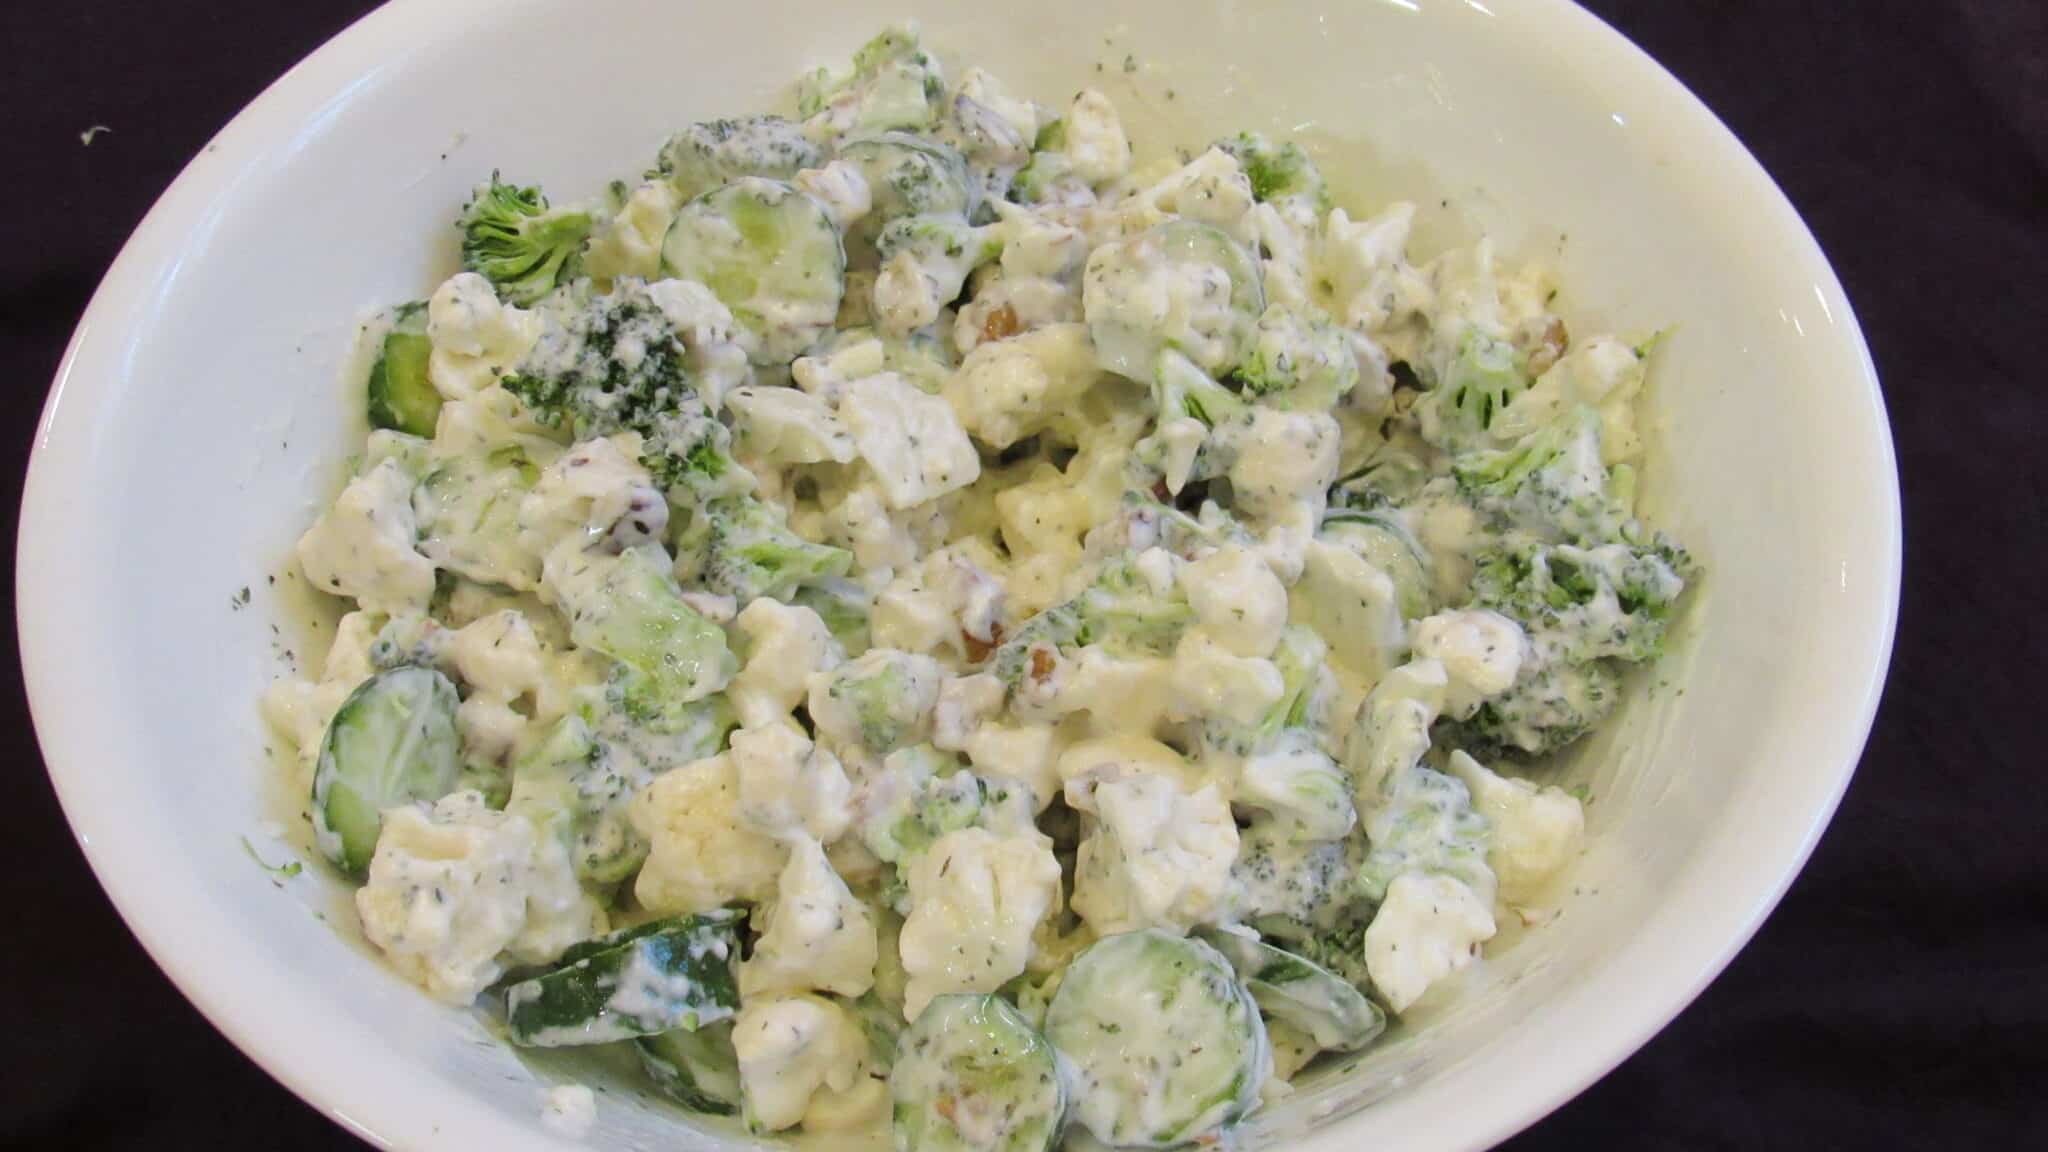 cauliflower broccoli salad is served on a white bowel.